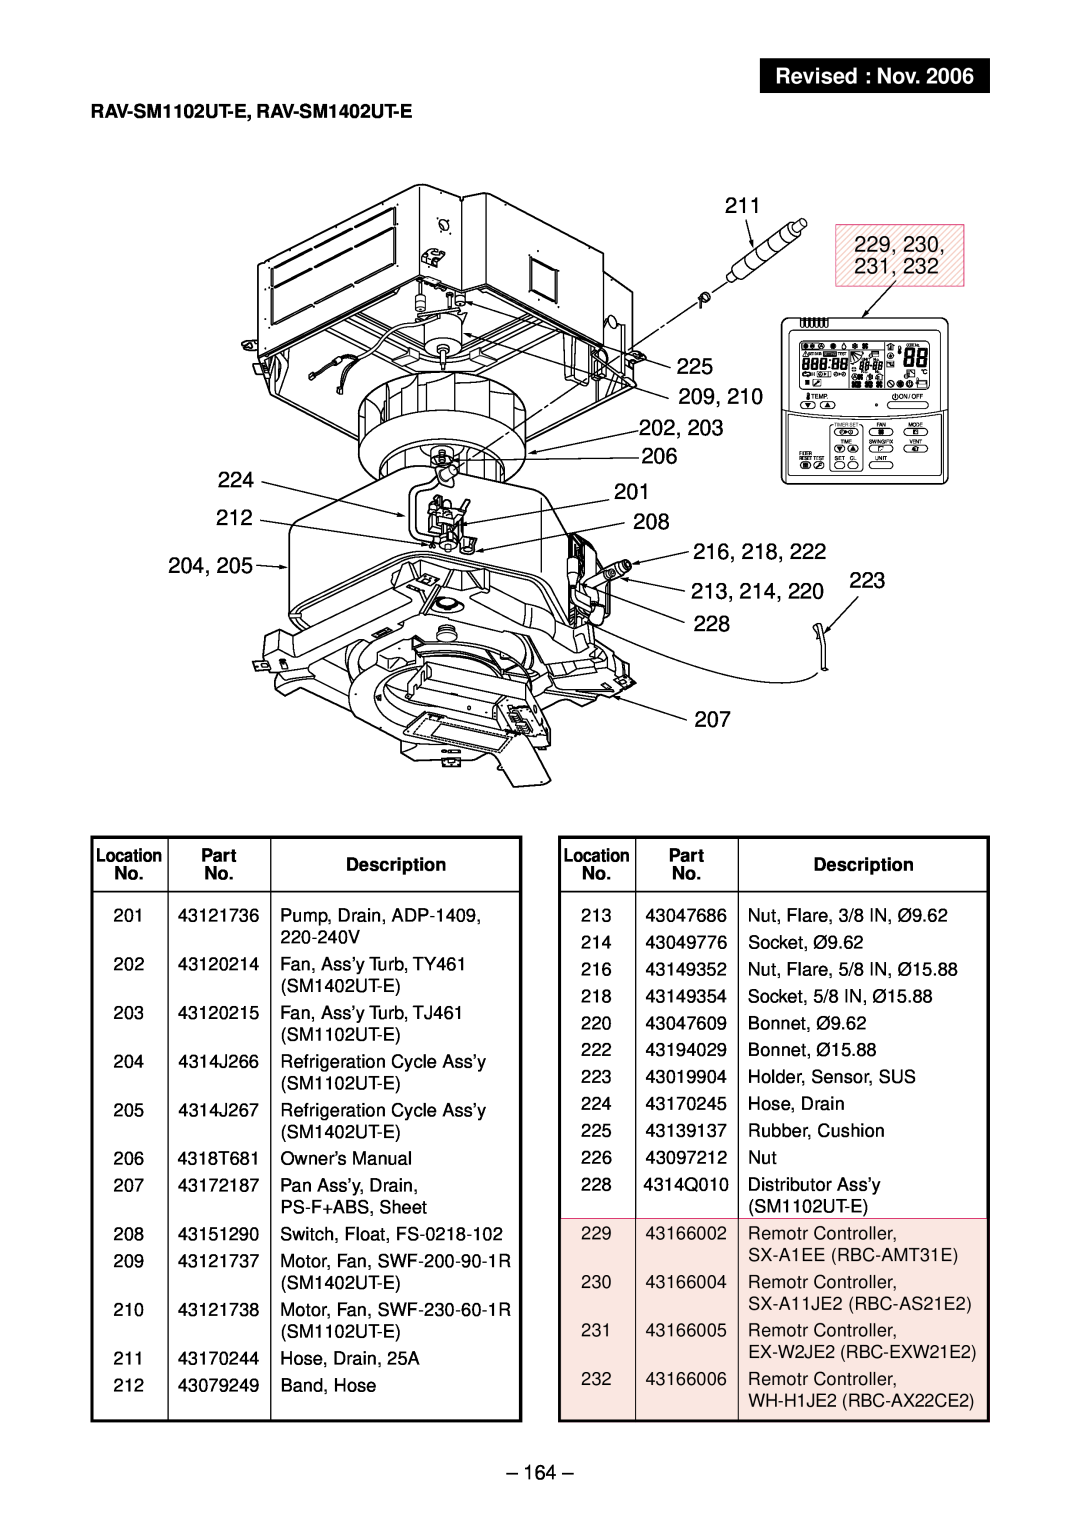 Toshiba RAV-SM1102UT-E, RAV-SM1402UT-E, RAV-SM802UT-E, RAV-SM562UT-E service manual Revised : Nov, 229 